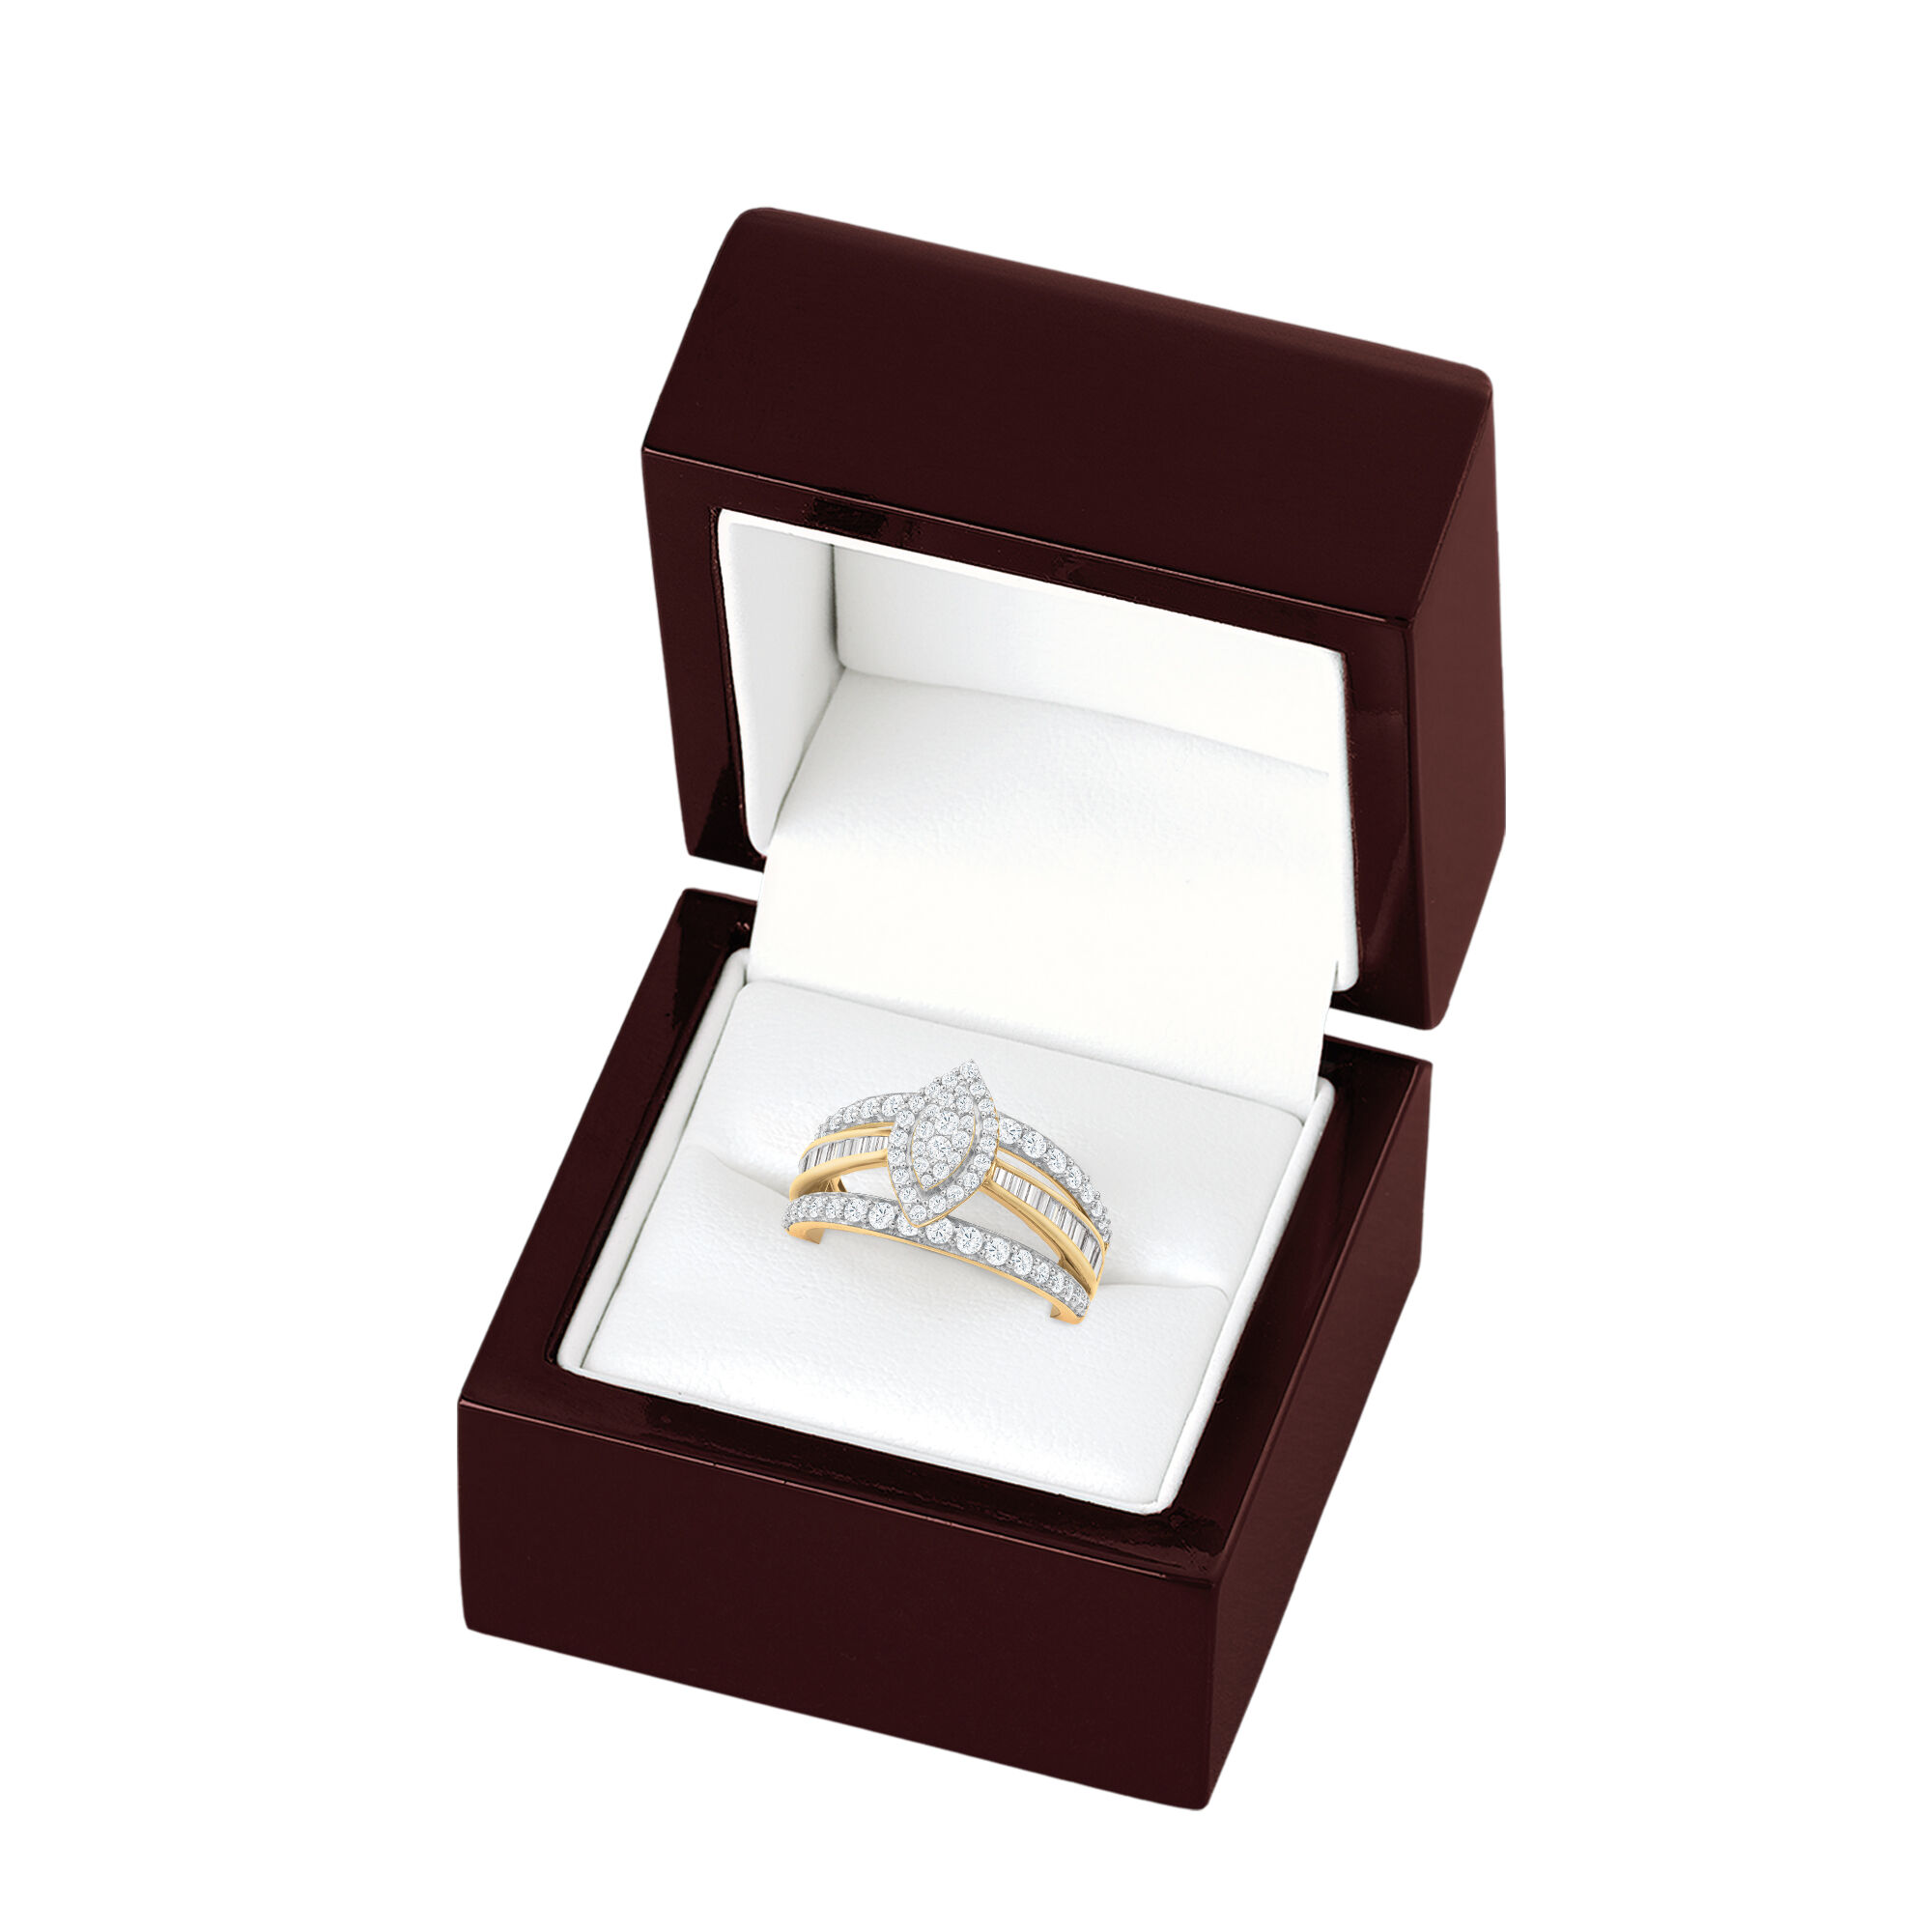 The One Hundred Diamond Ring 10924 0010 g gift box